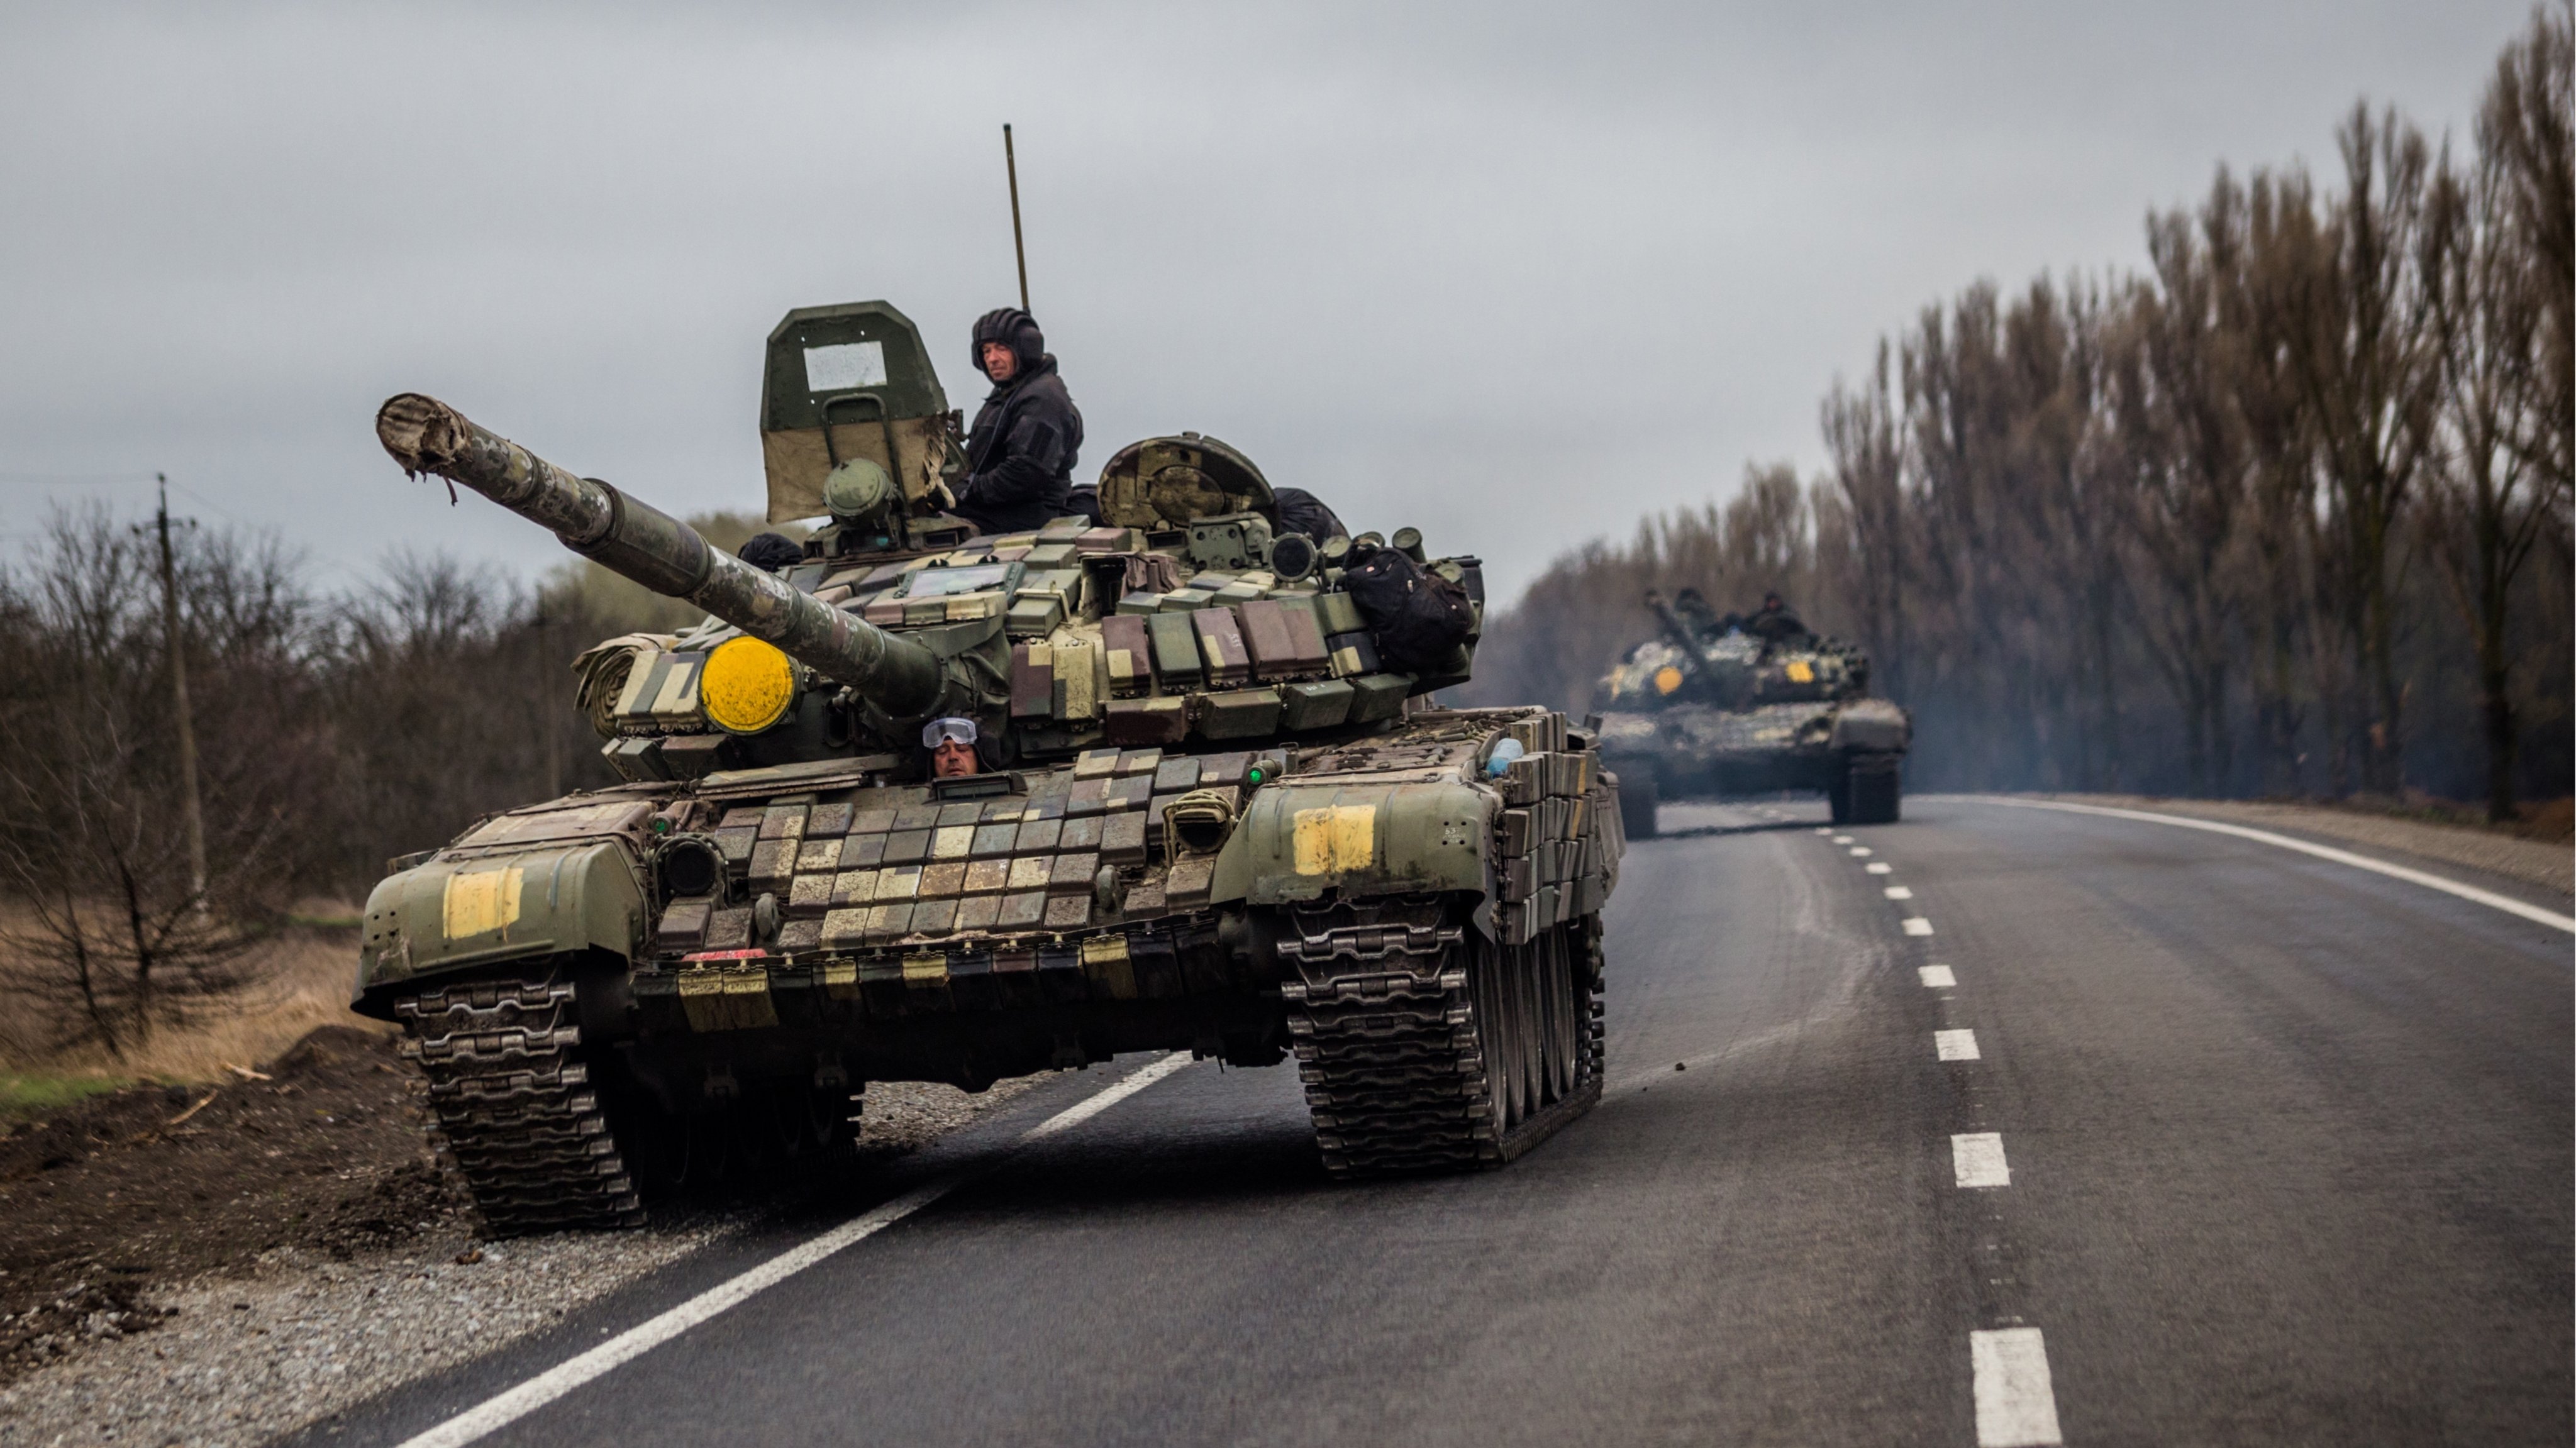 ZAPORIZHZHIA, UKRAINE - APRIL 12: A Ukrainian tank on the road